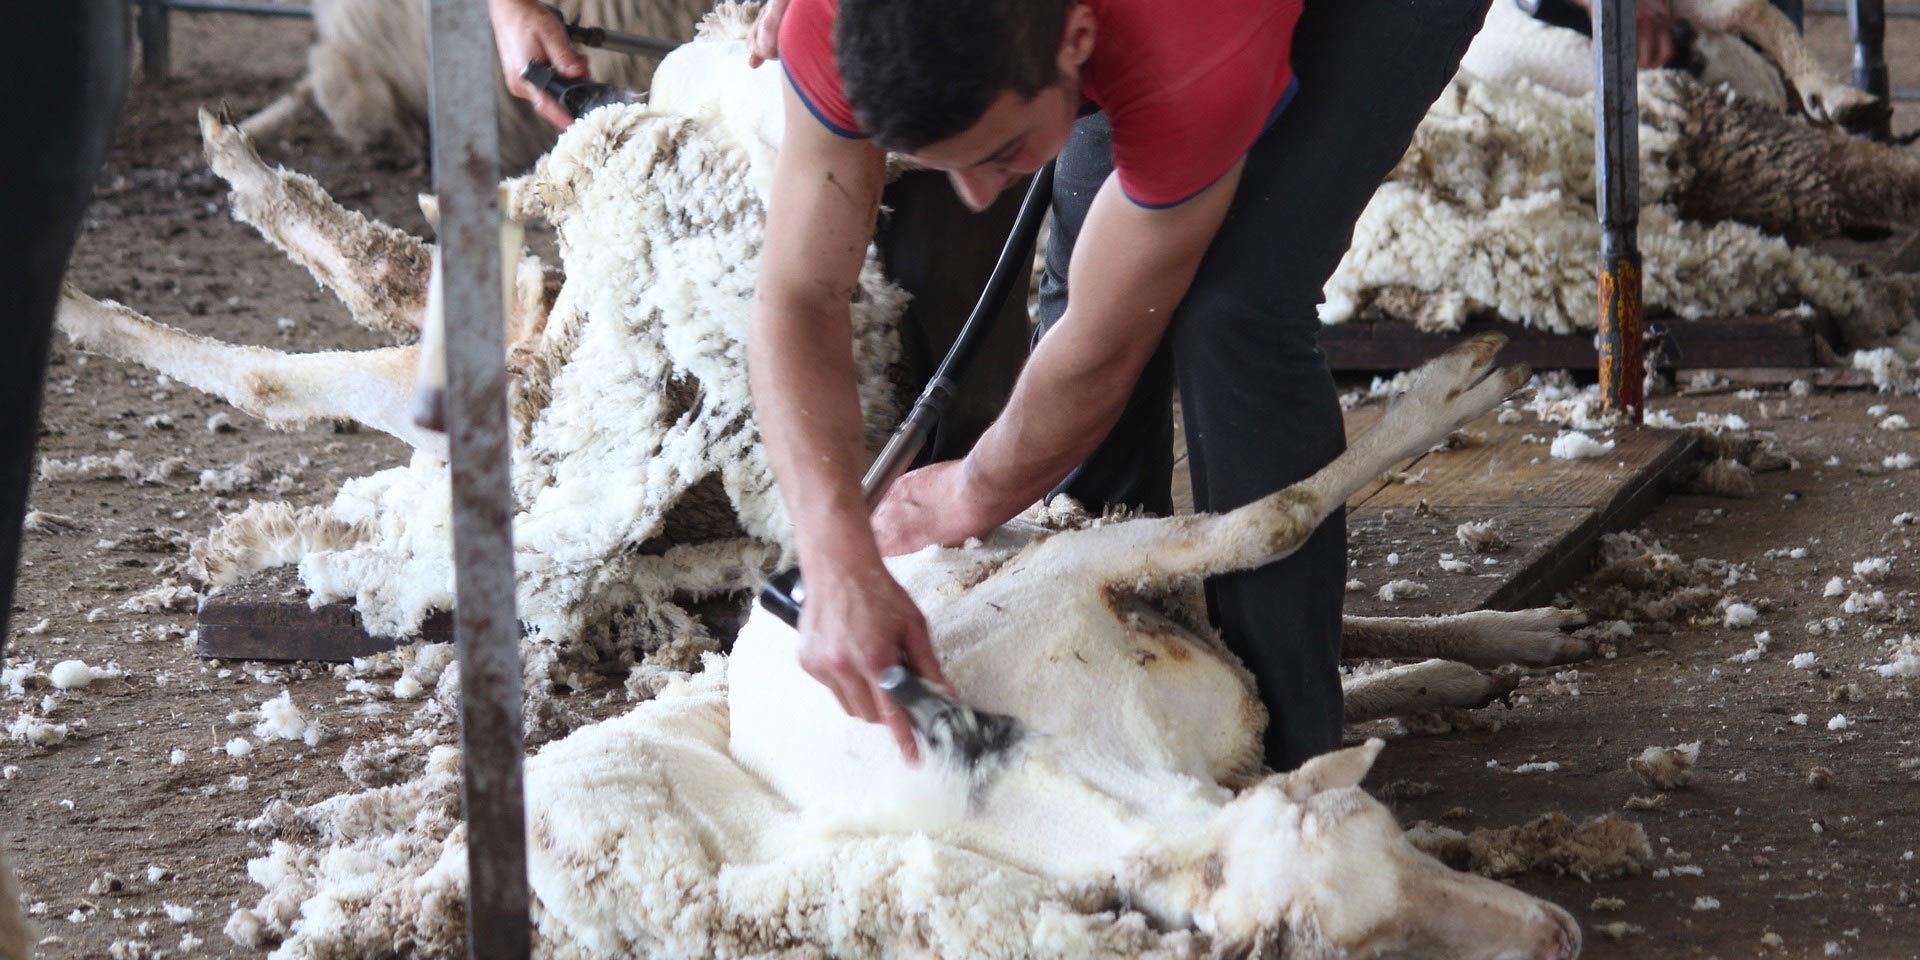 Liegendes Schaf wird per Hand geschoren